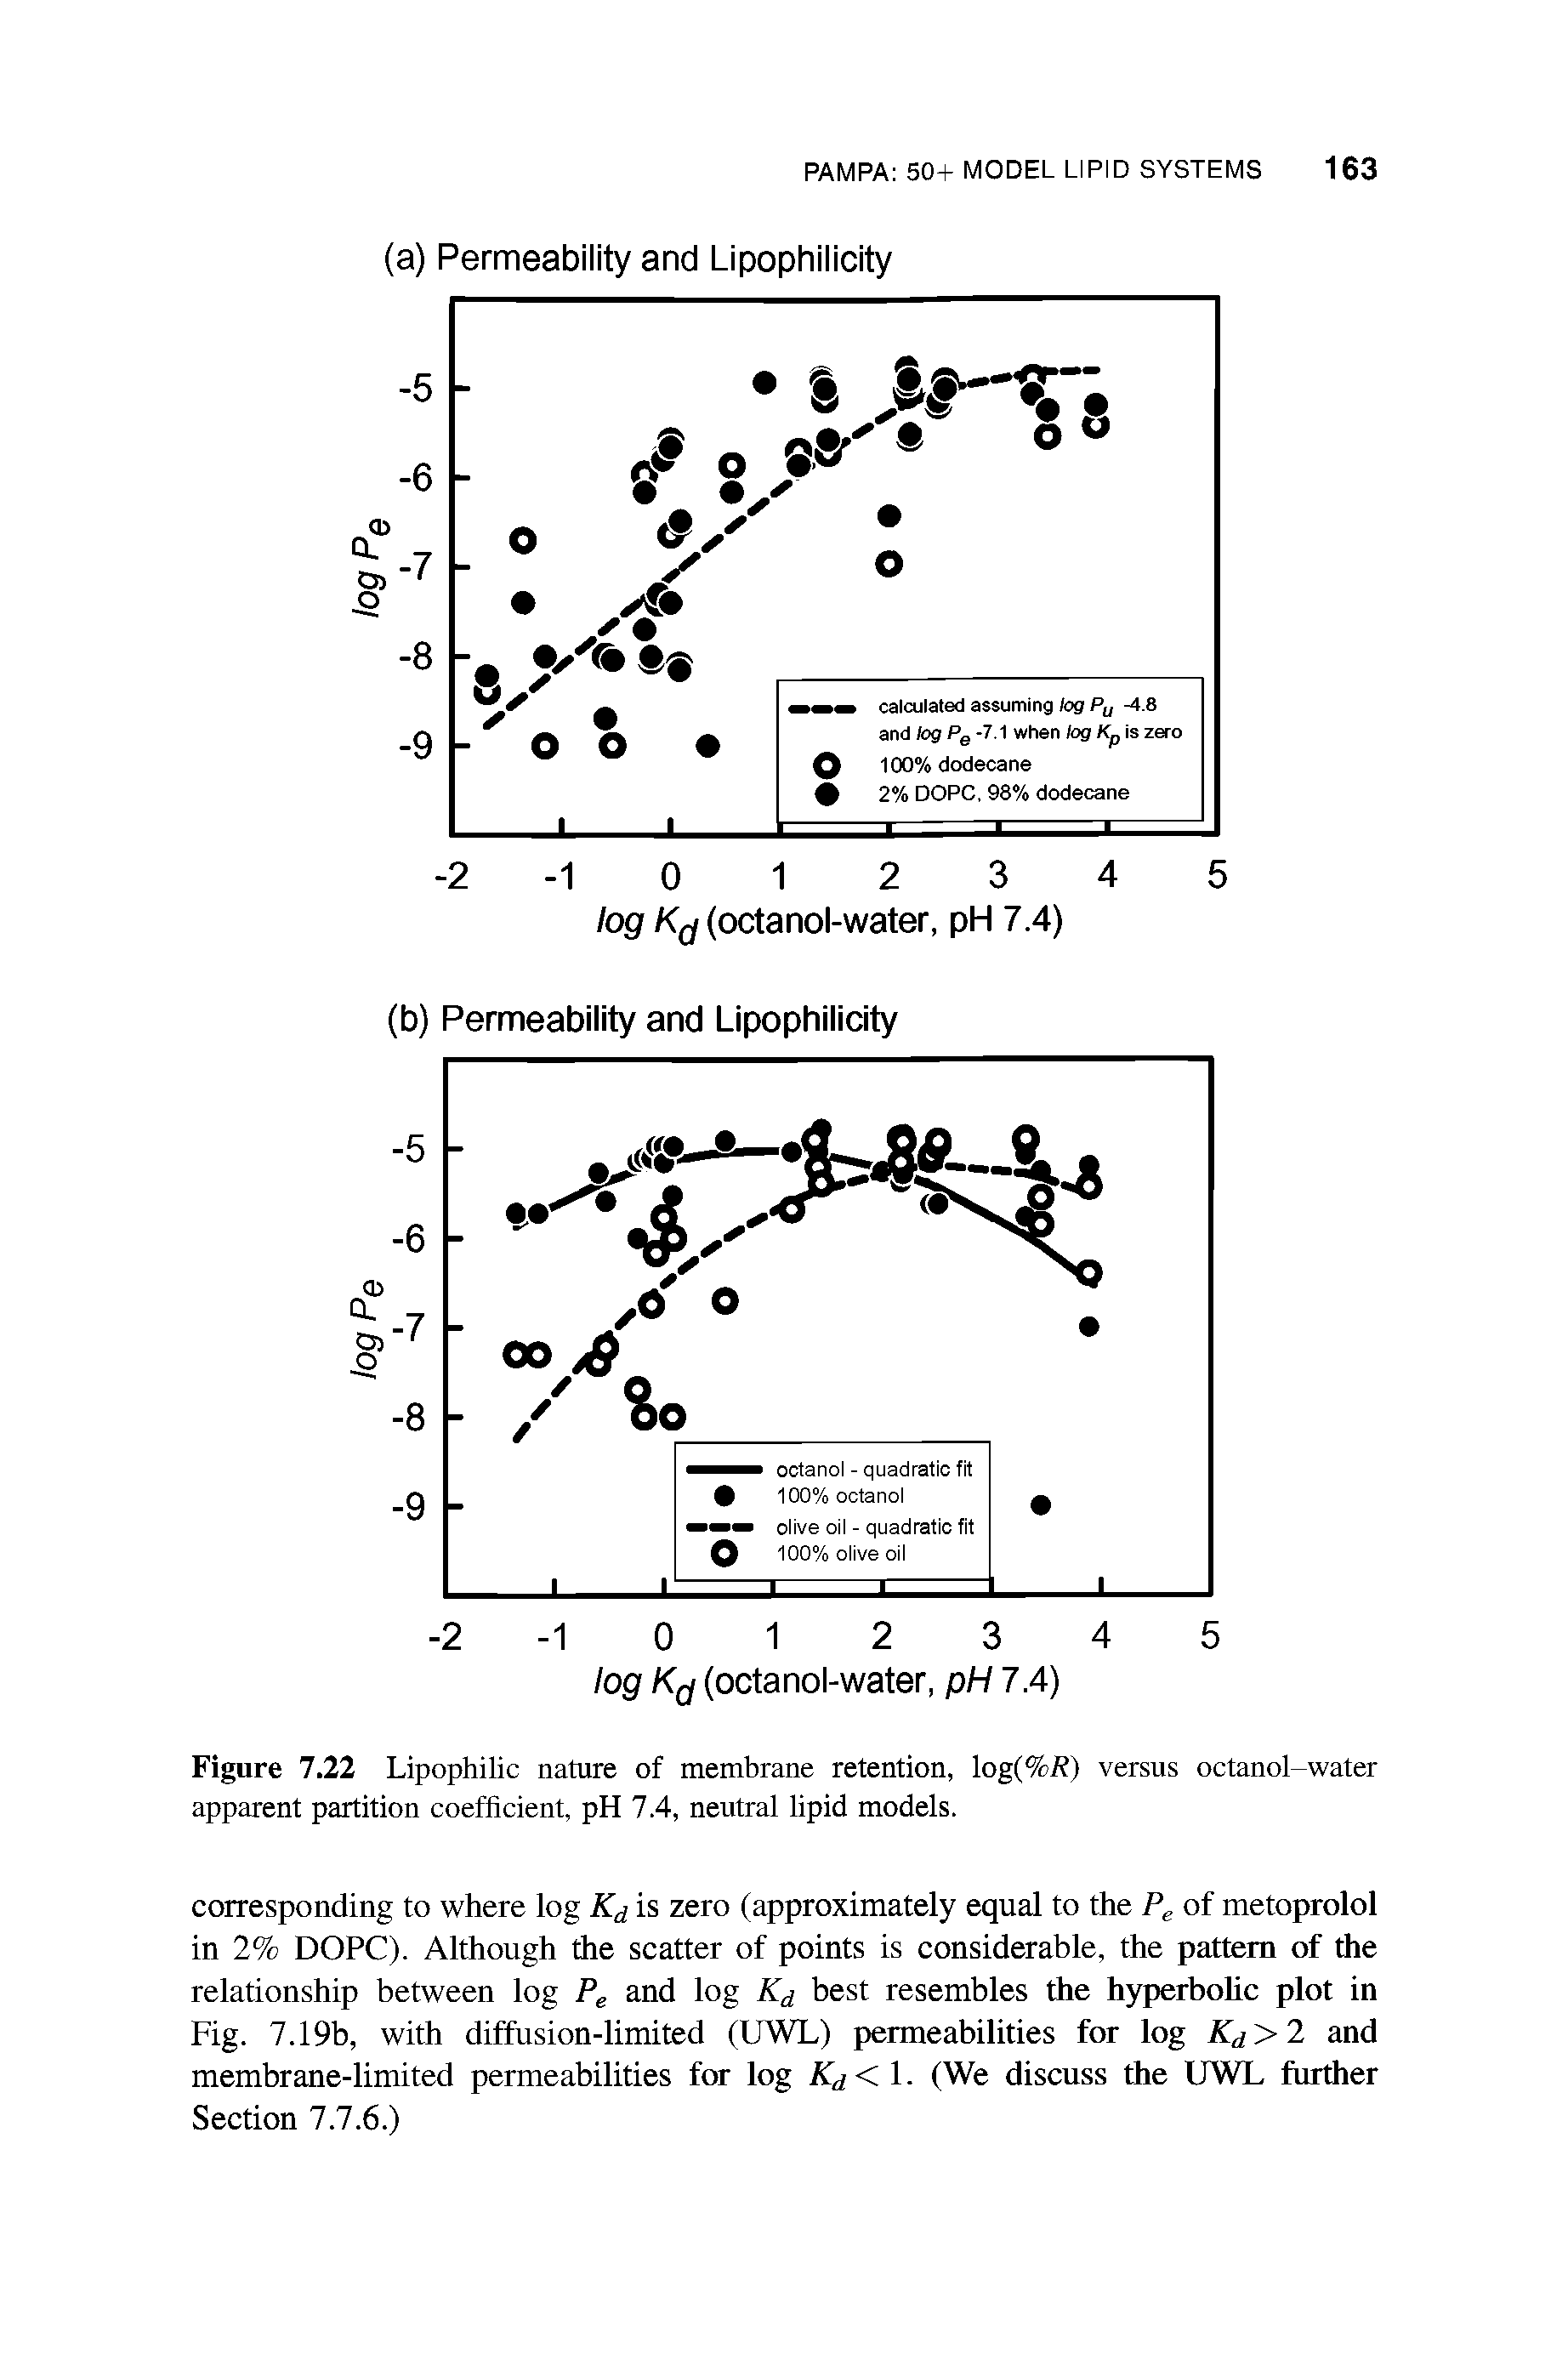 Figure 7.22 Lipophilic nature of membrane retention, log(%R) versus octanol-water apparent partition coefficient, pH 7.4, neutral lipid models.